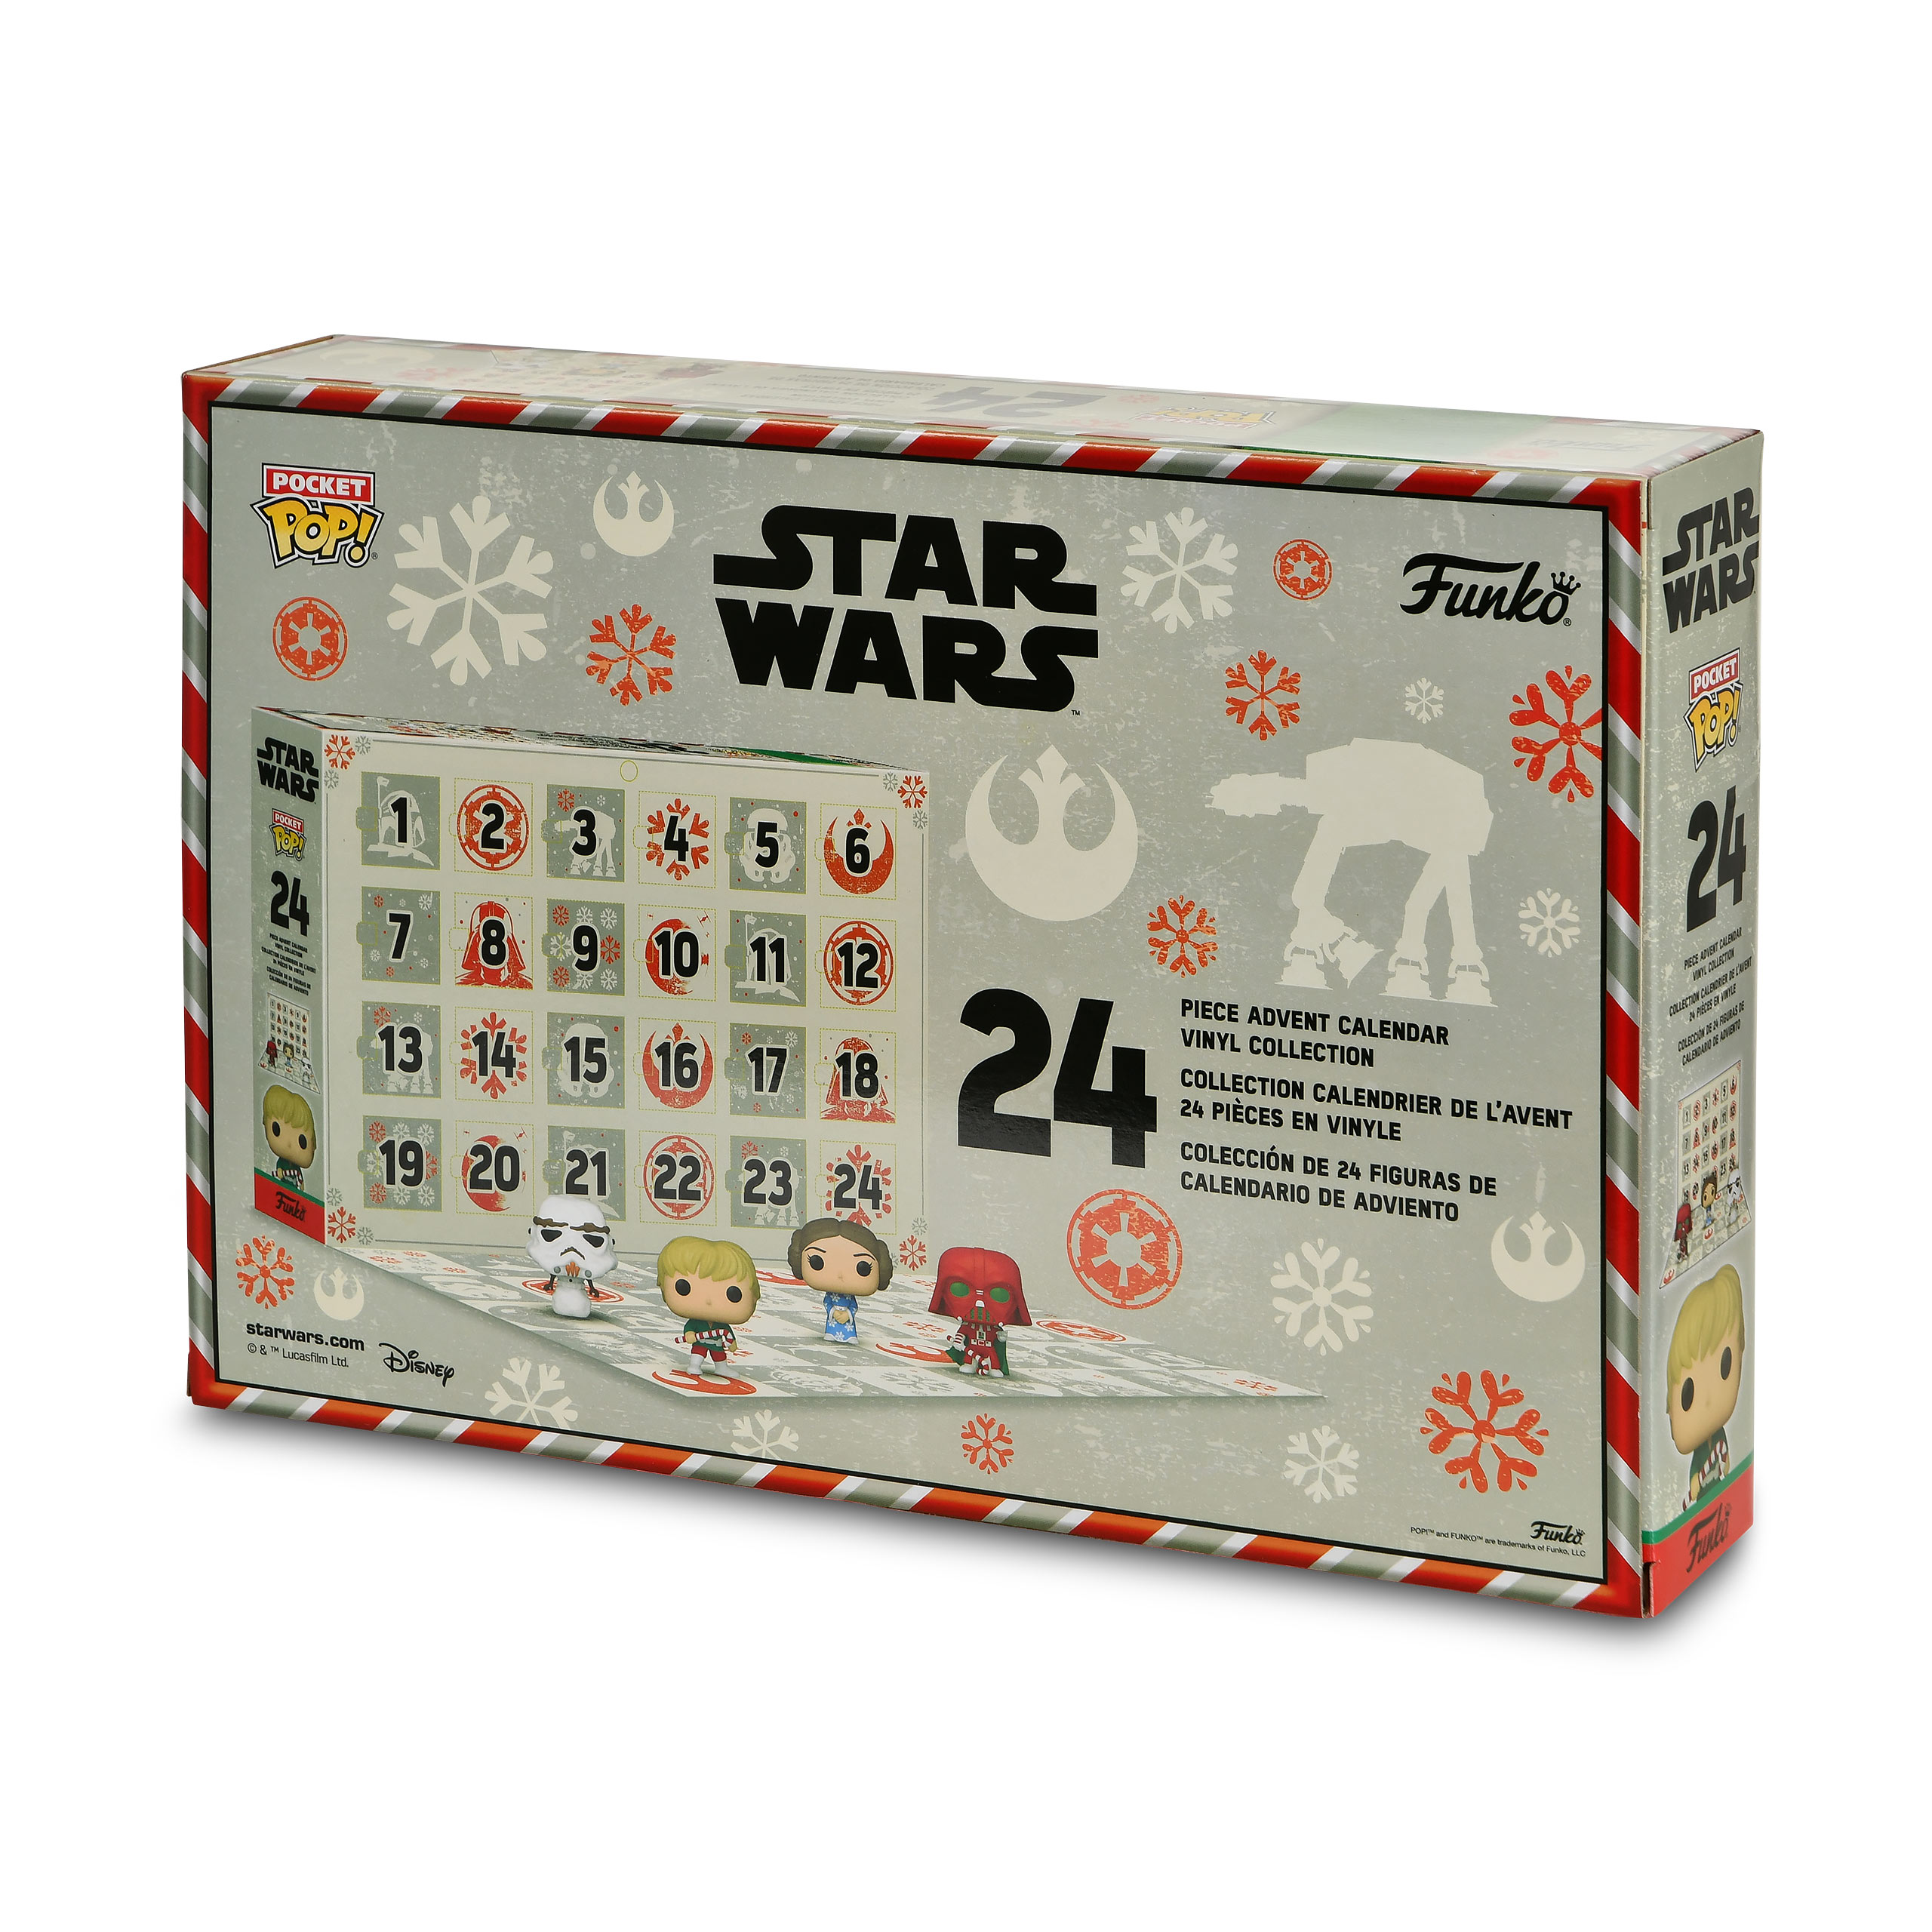 Star Wars - Holiday Funko Pop Adventskalender